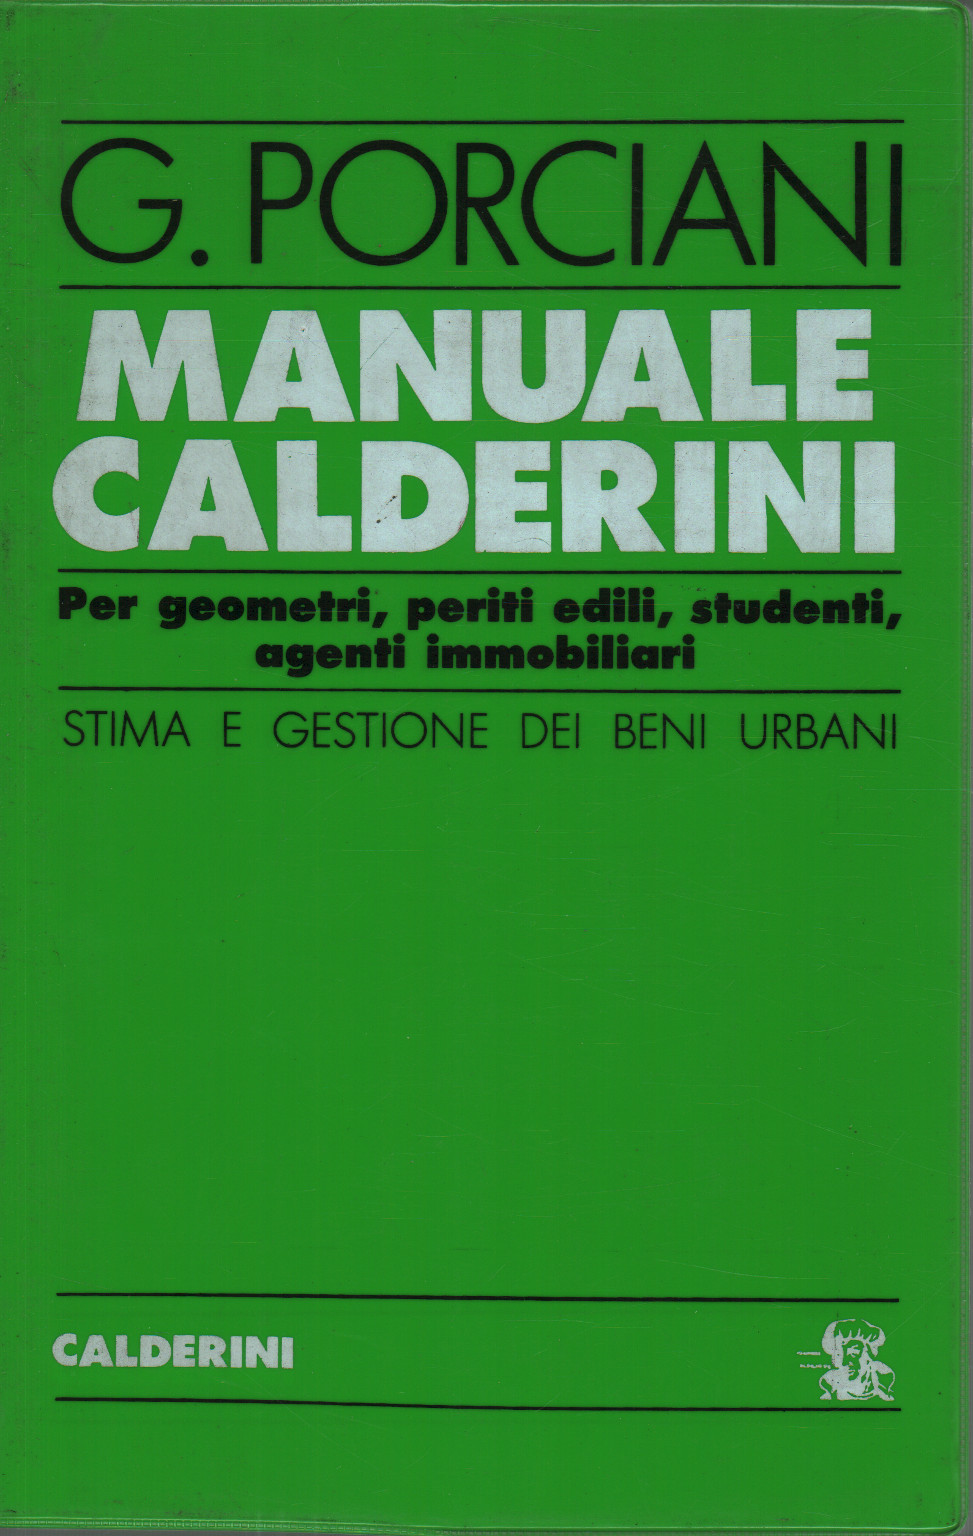 Manuel Calderini, s.un.